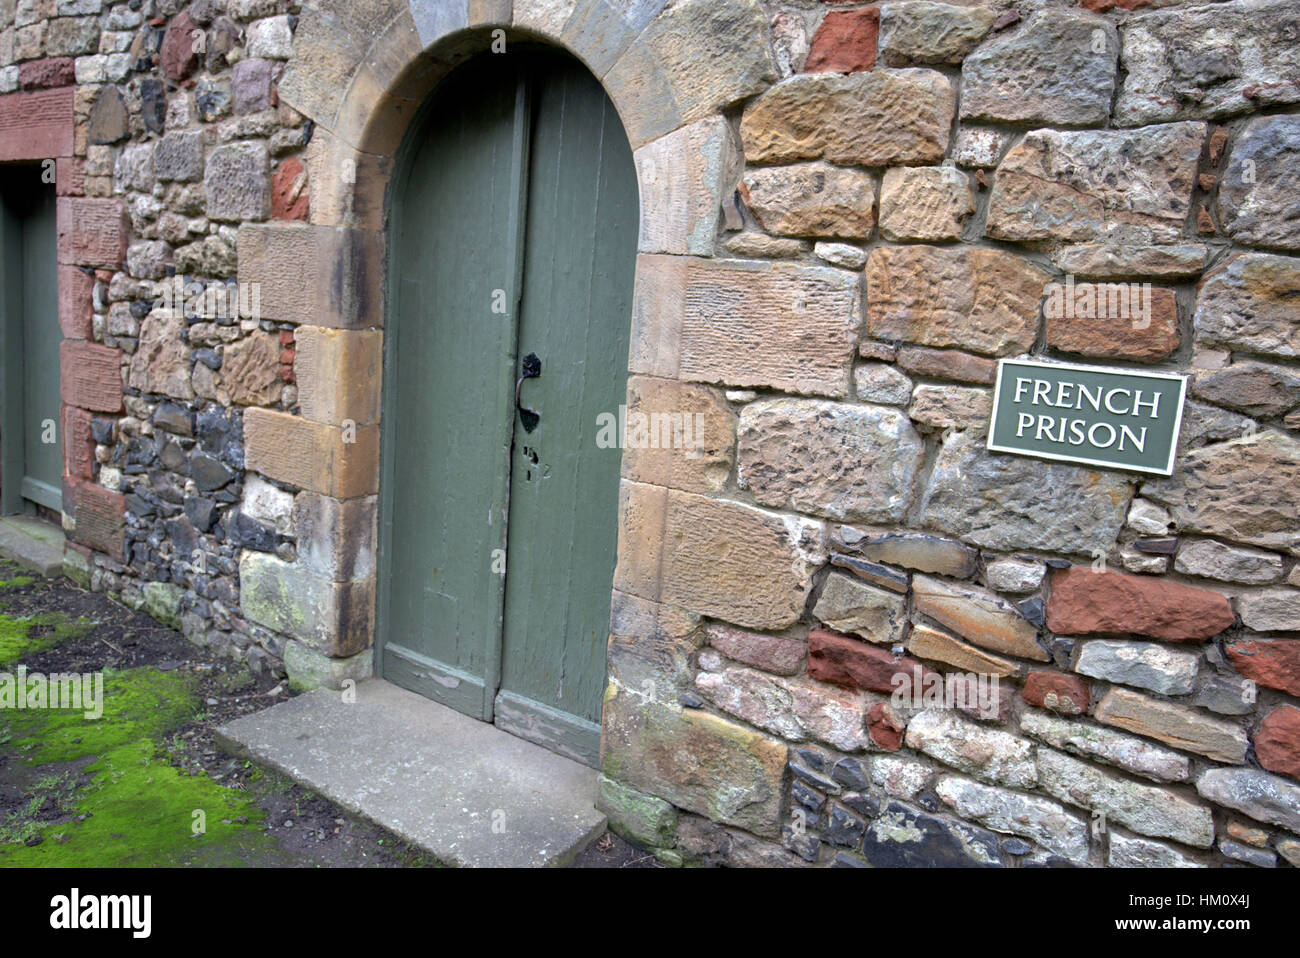 The French Prison Dumbarton Castle in Scotland. It overlooks the Scottish town of Dumbarton Stock Photo